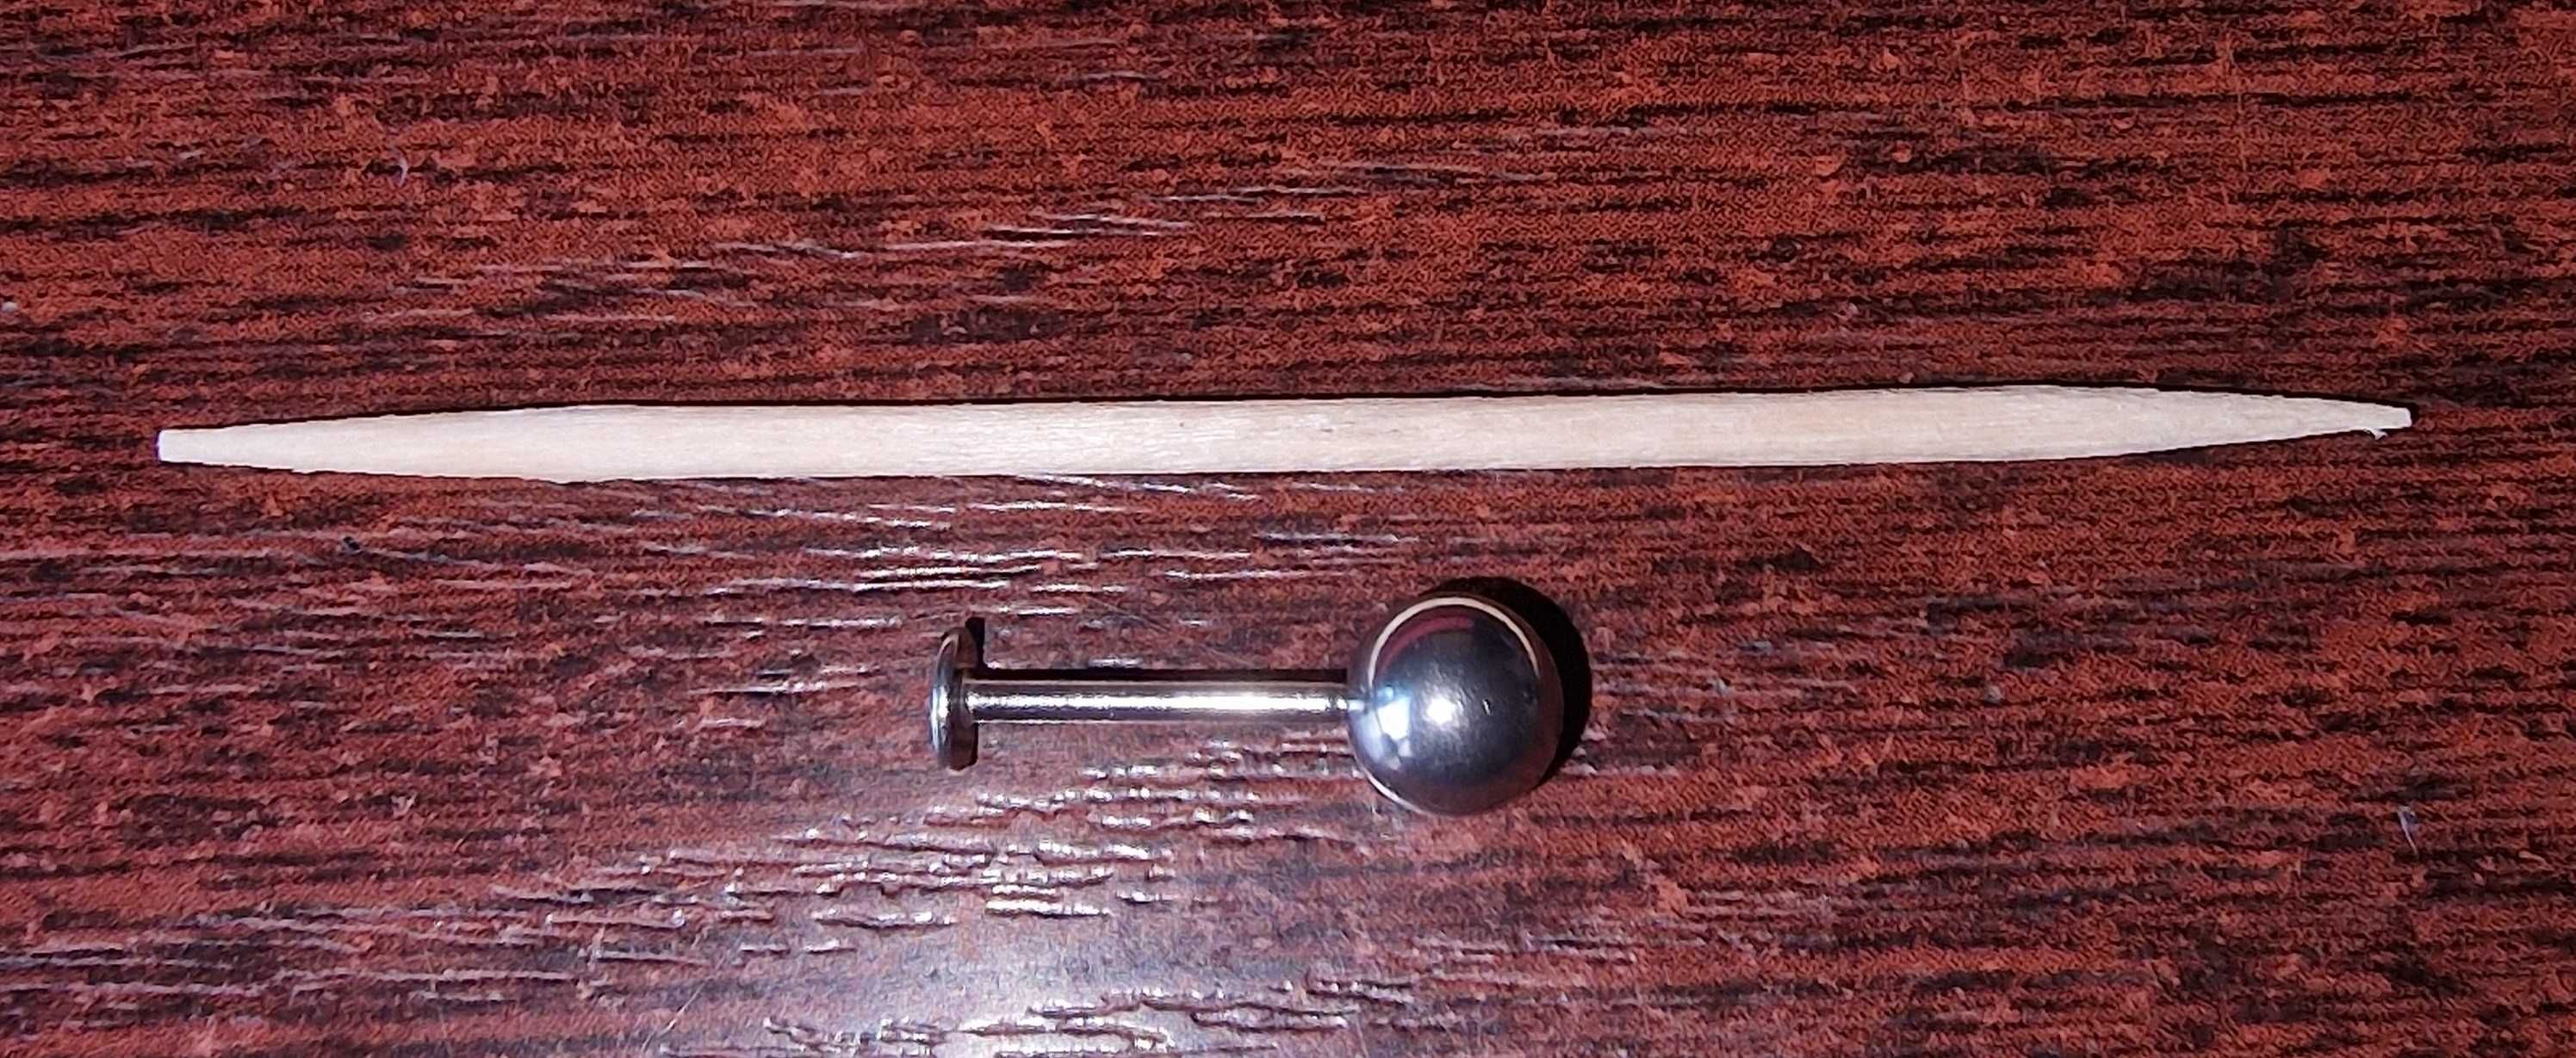 Labret klasyczny 12 mm / 1 mm z kulką 6 mm, tytan piercing